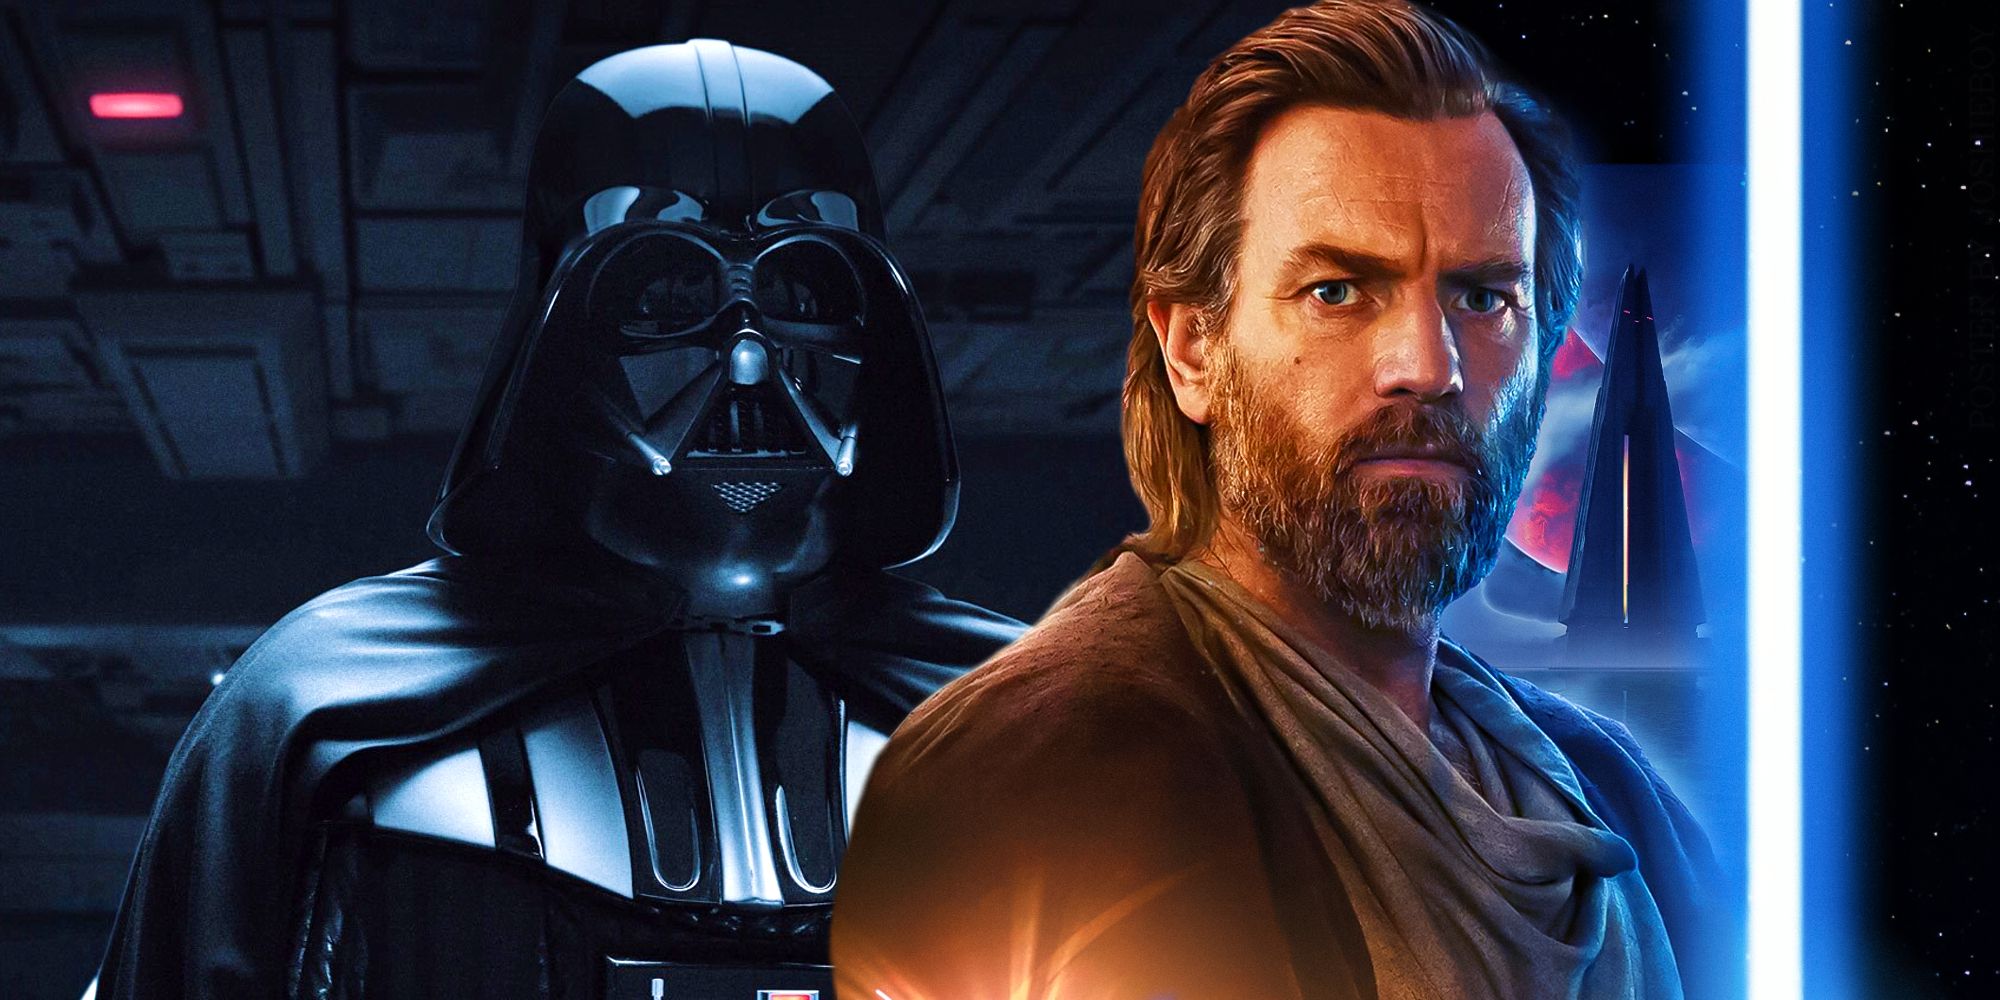 Obi-Wan Kenobi wielding his lightsaber next to Darth Vader from the series.